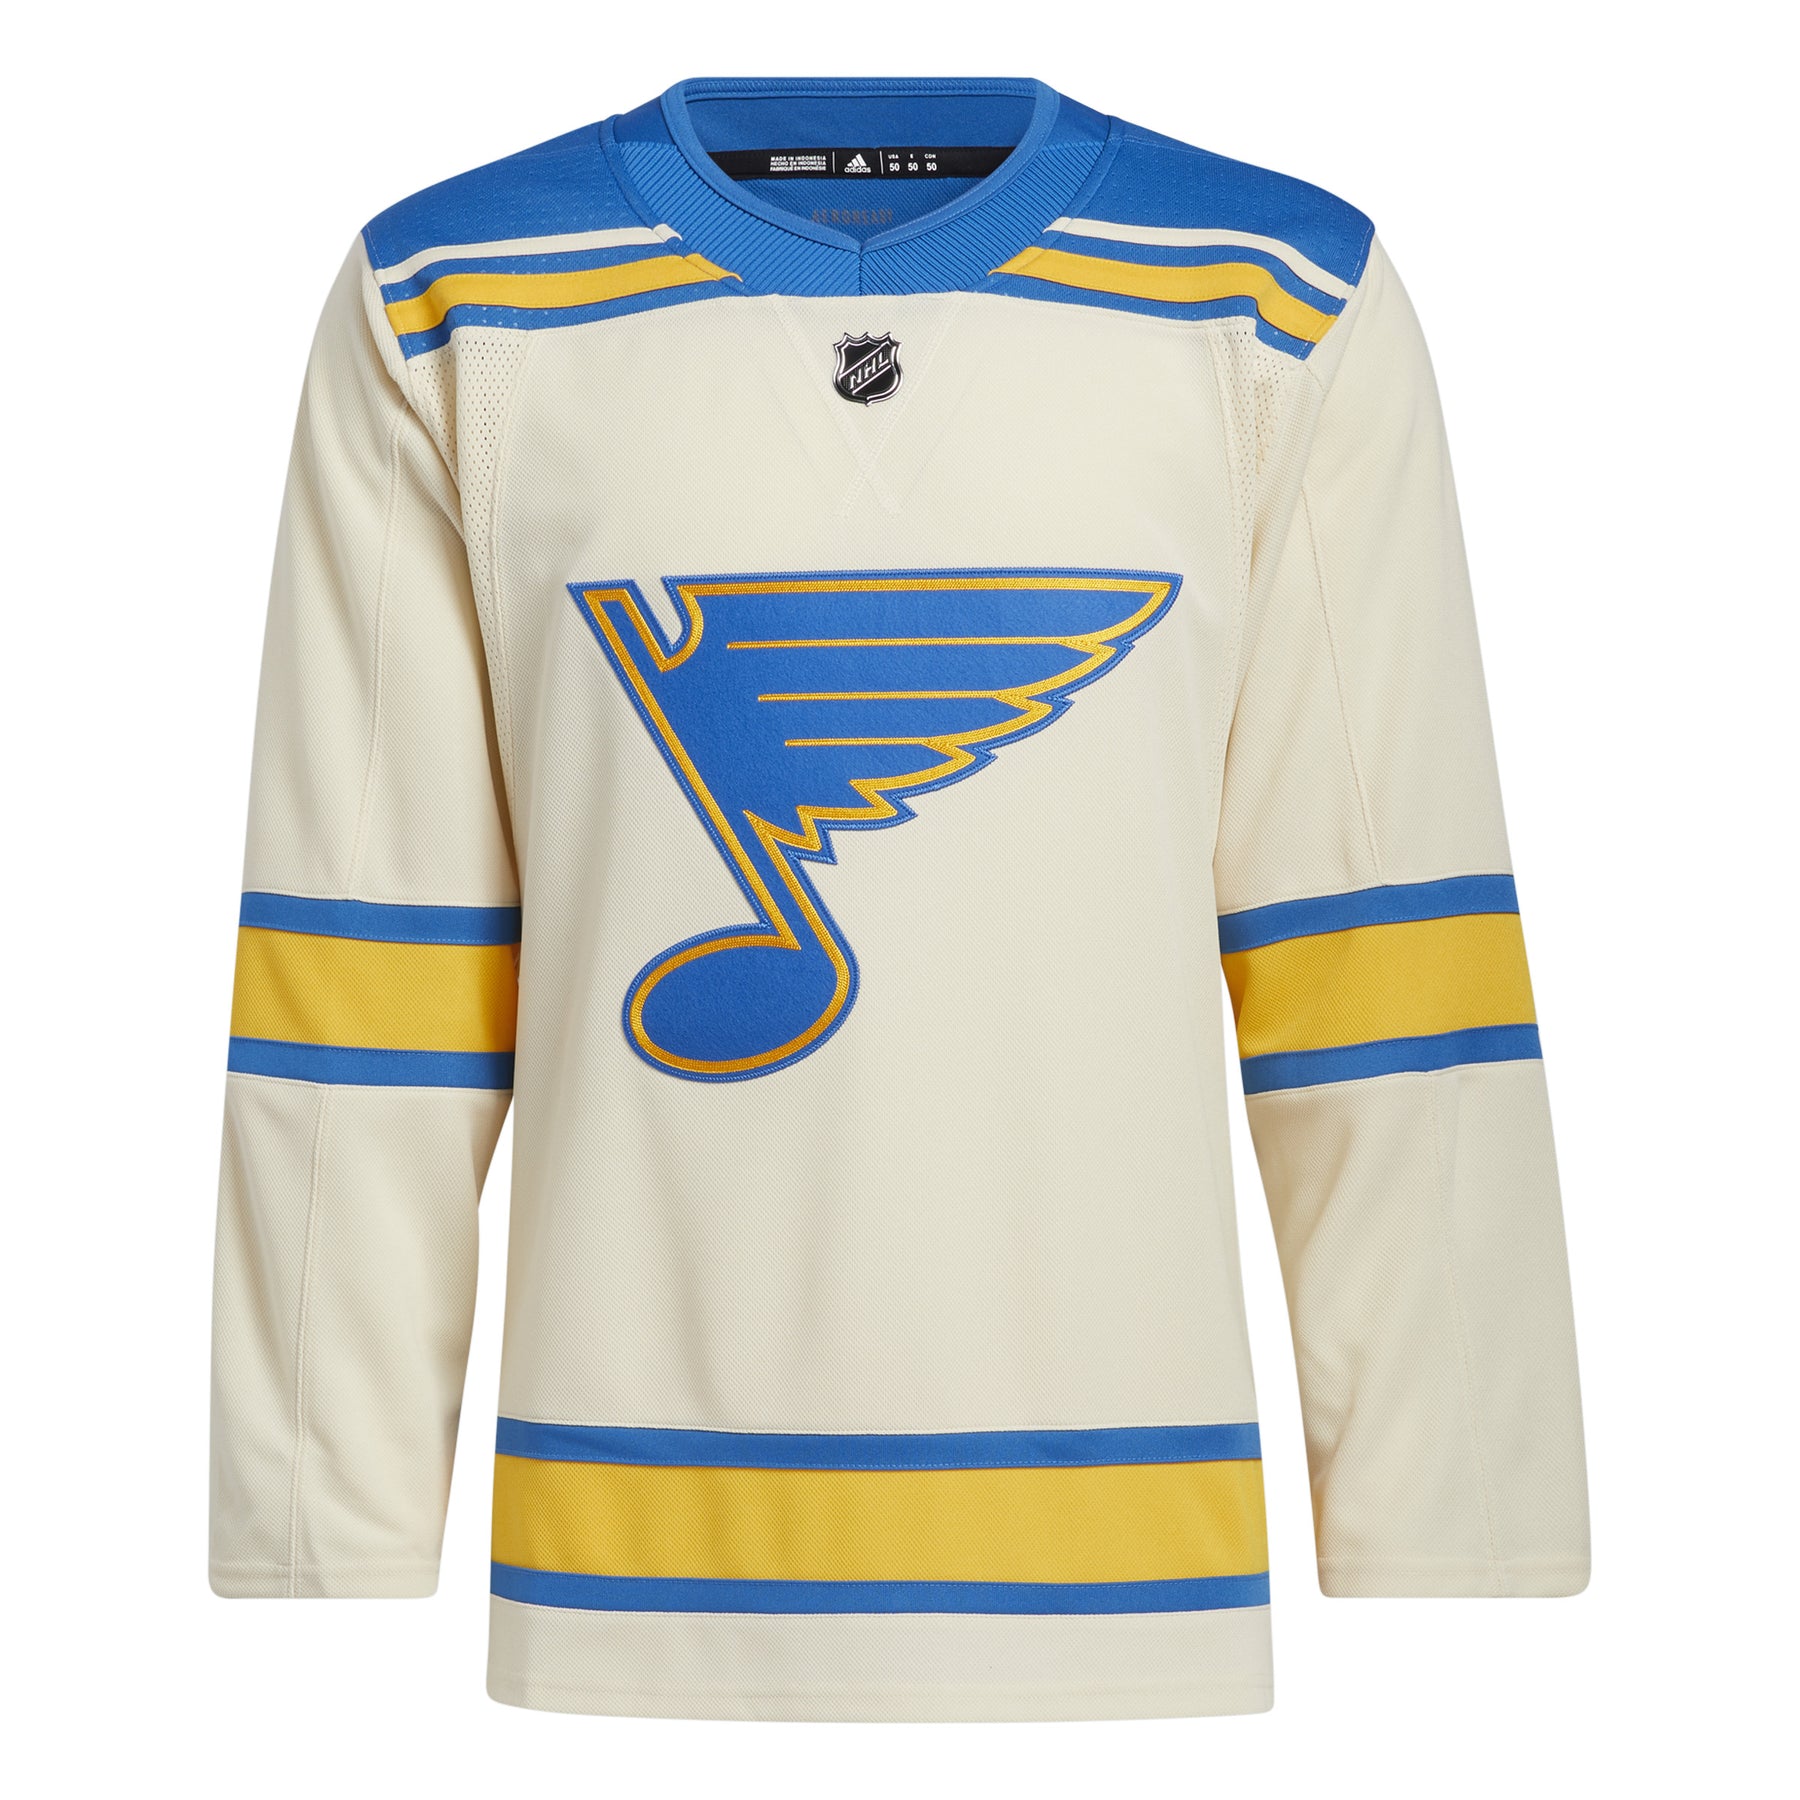 St. Louis Blues - Reverse Retro Authentic NHL Jersey/Customized